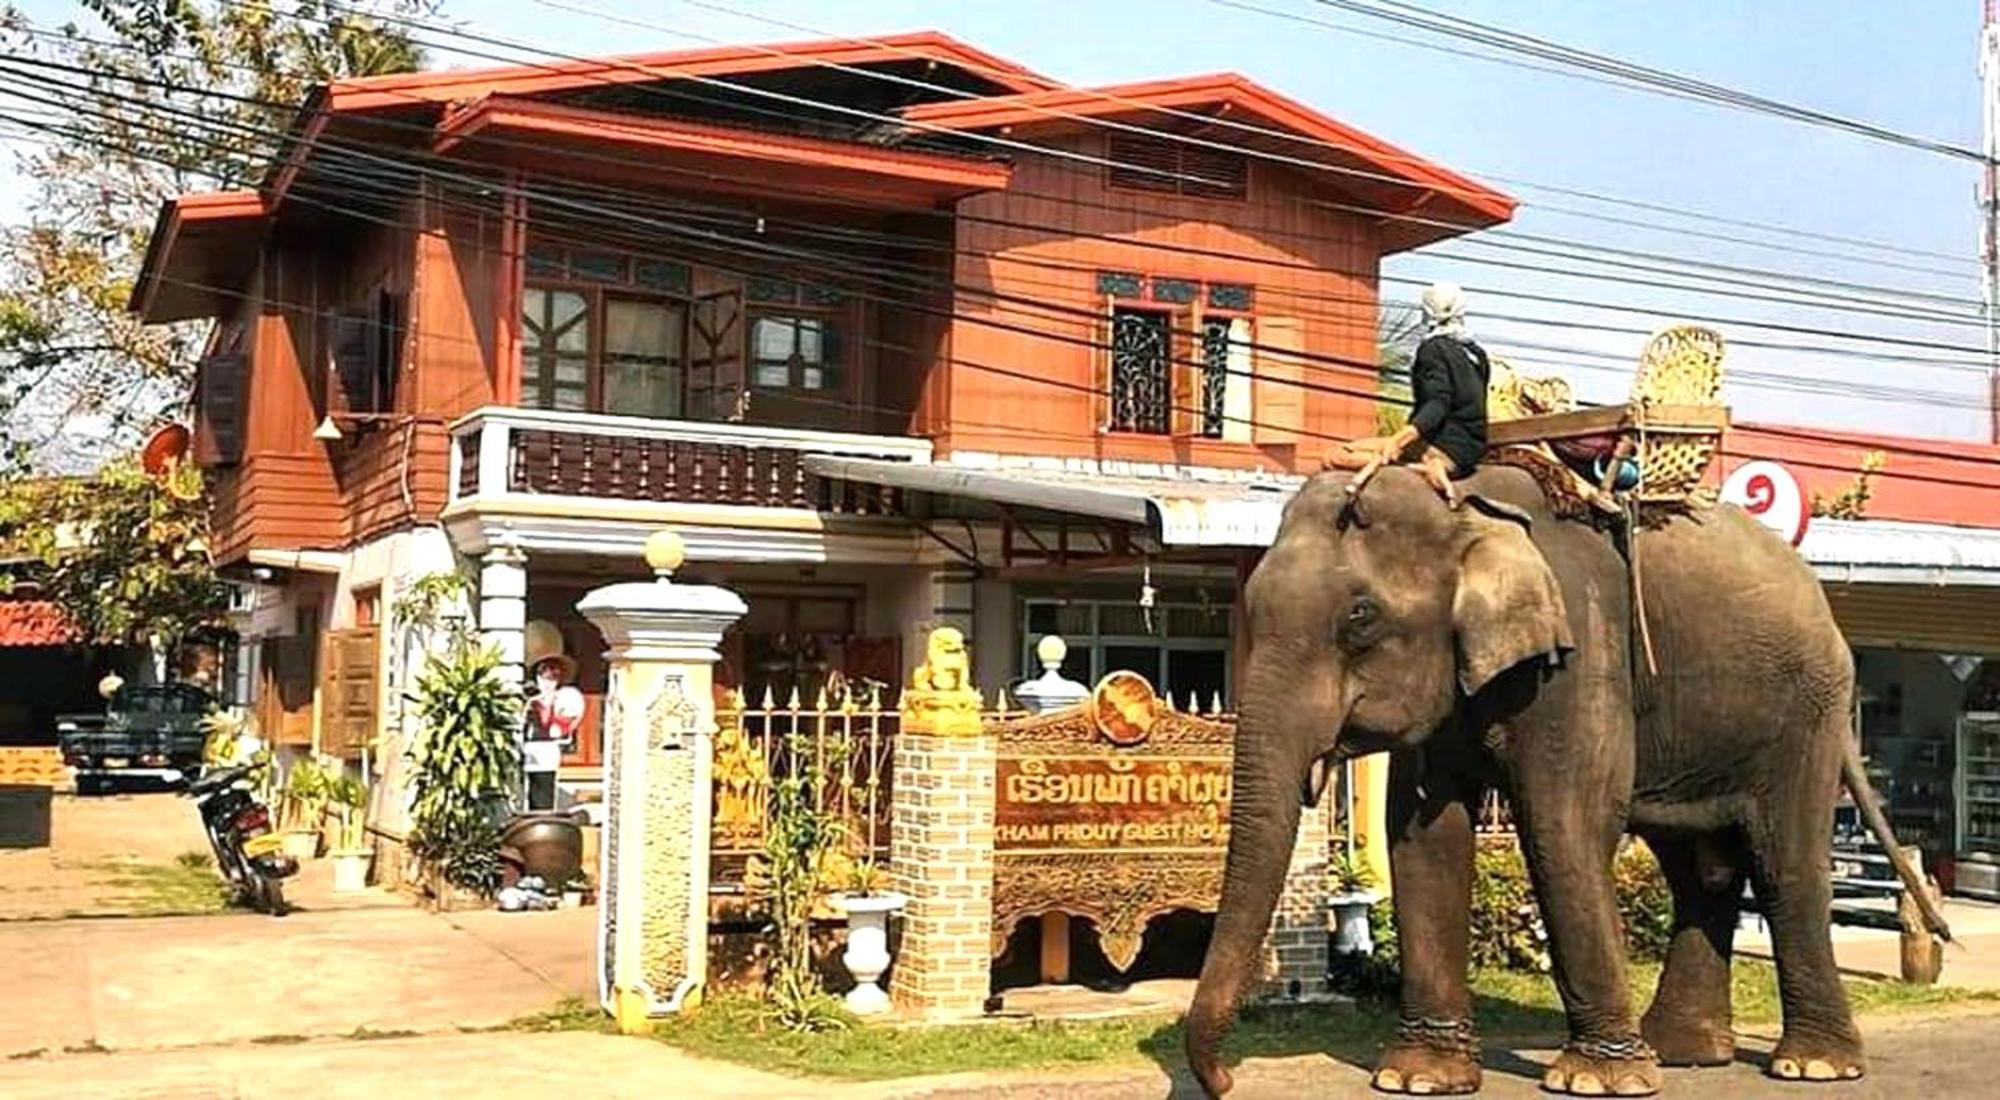 Khamphouy Guesthouse Champasak Exterior photo